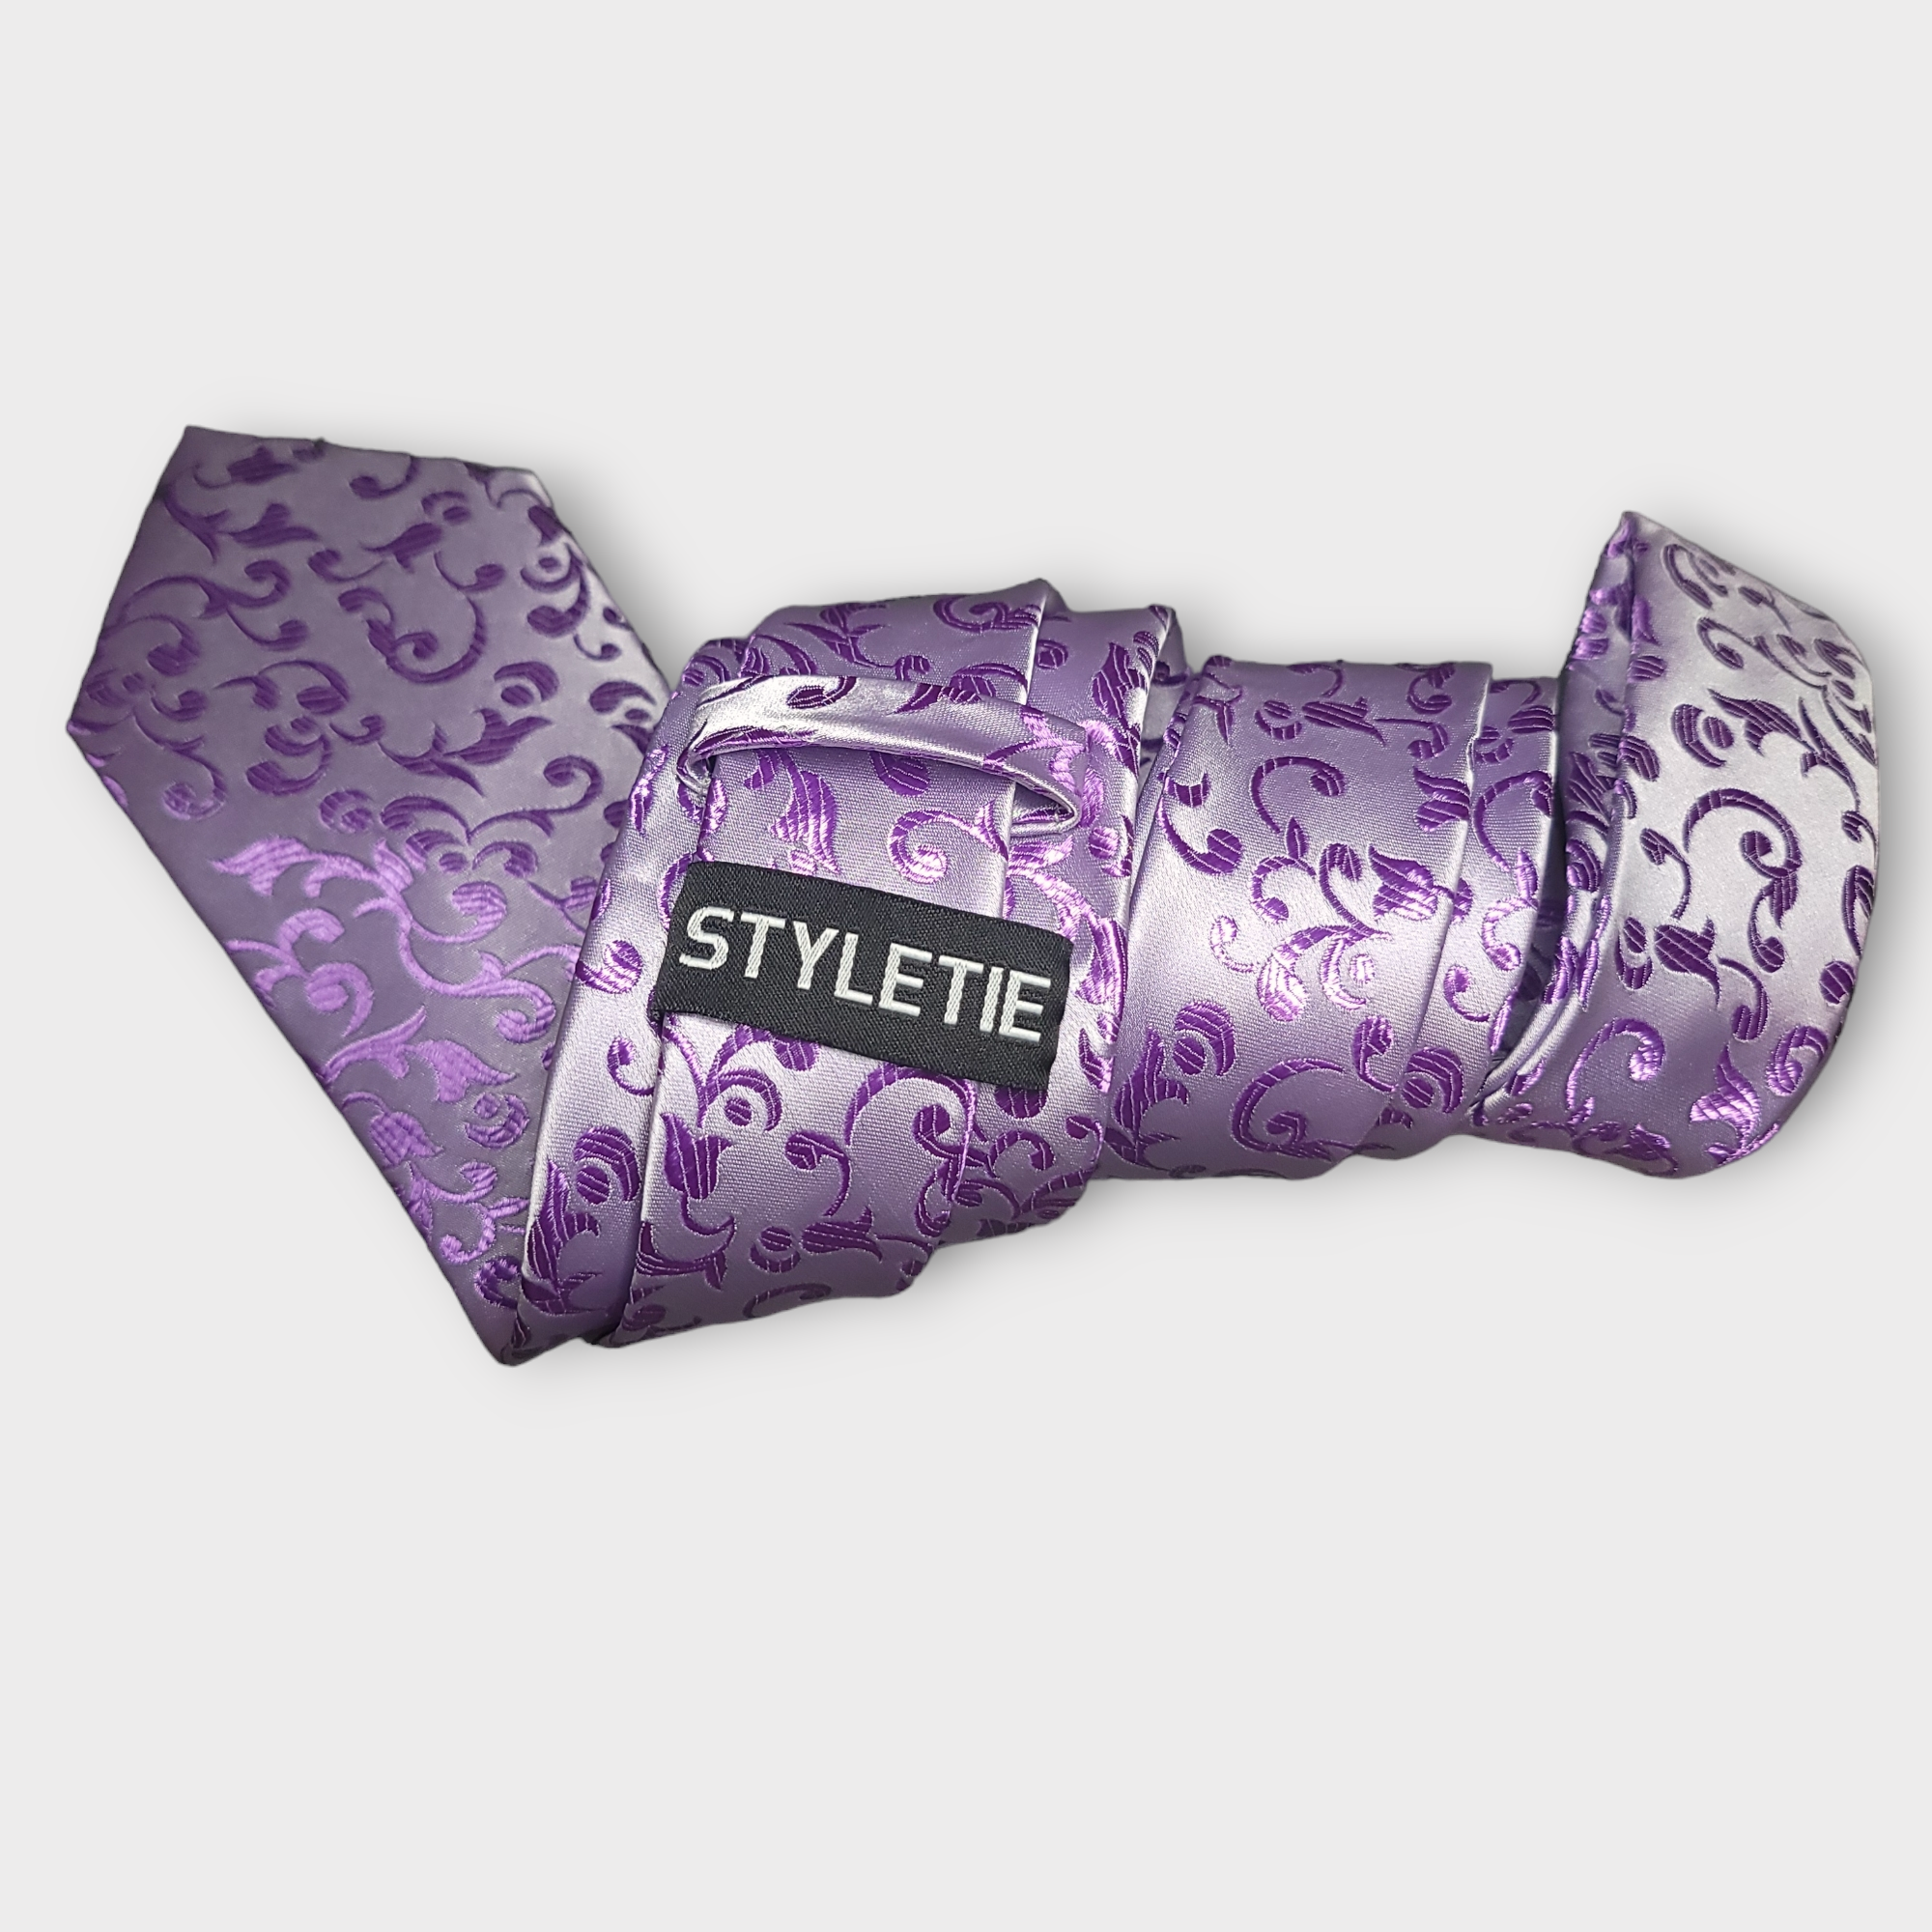 Lavender Purple Floral Silk Tie Pocket Square Cufflinks Set